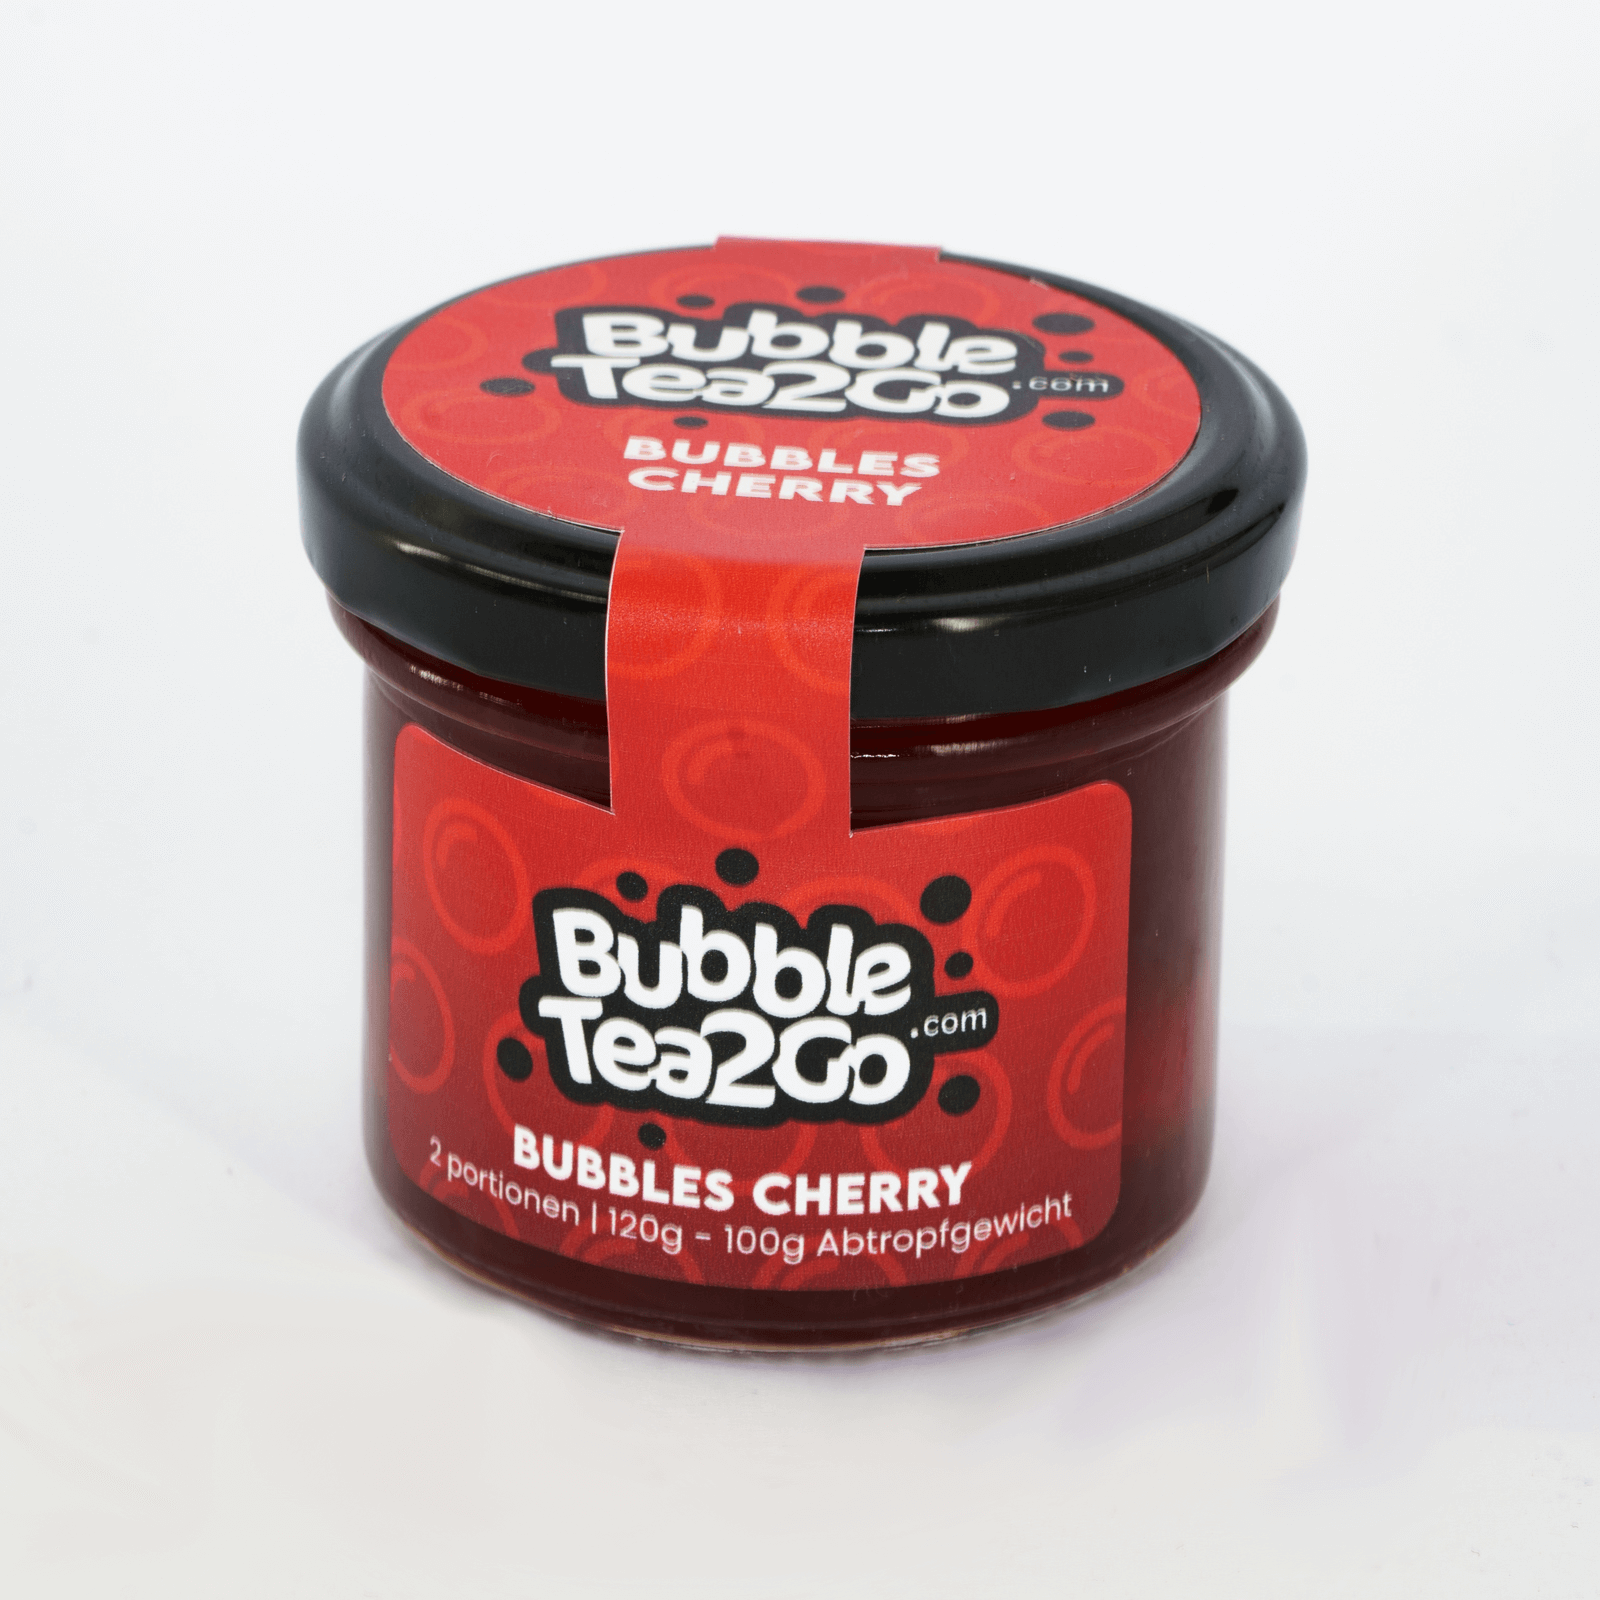 Bubbles - Cherry 2 portions (120g)